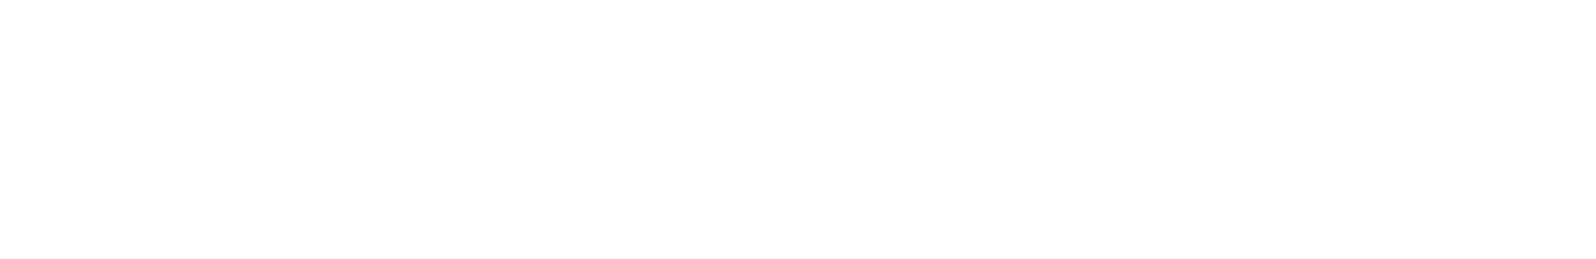 The Cheesecake Factory
 Logo groß für dunkle Hintergründe (transparentes PNG)